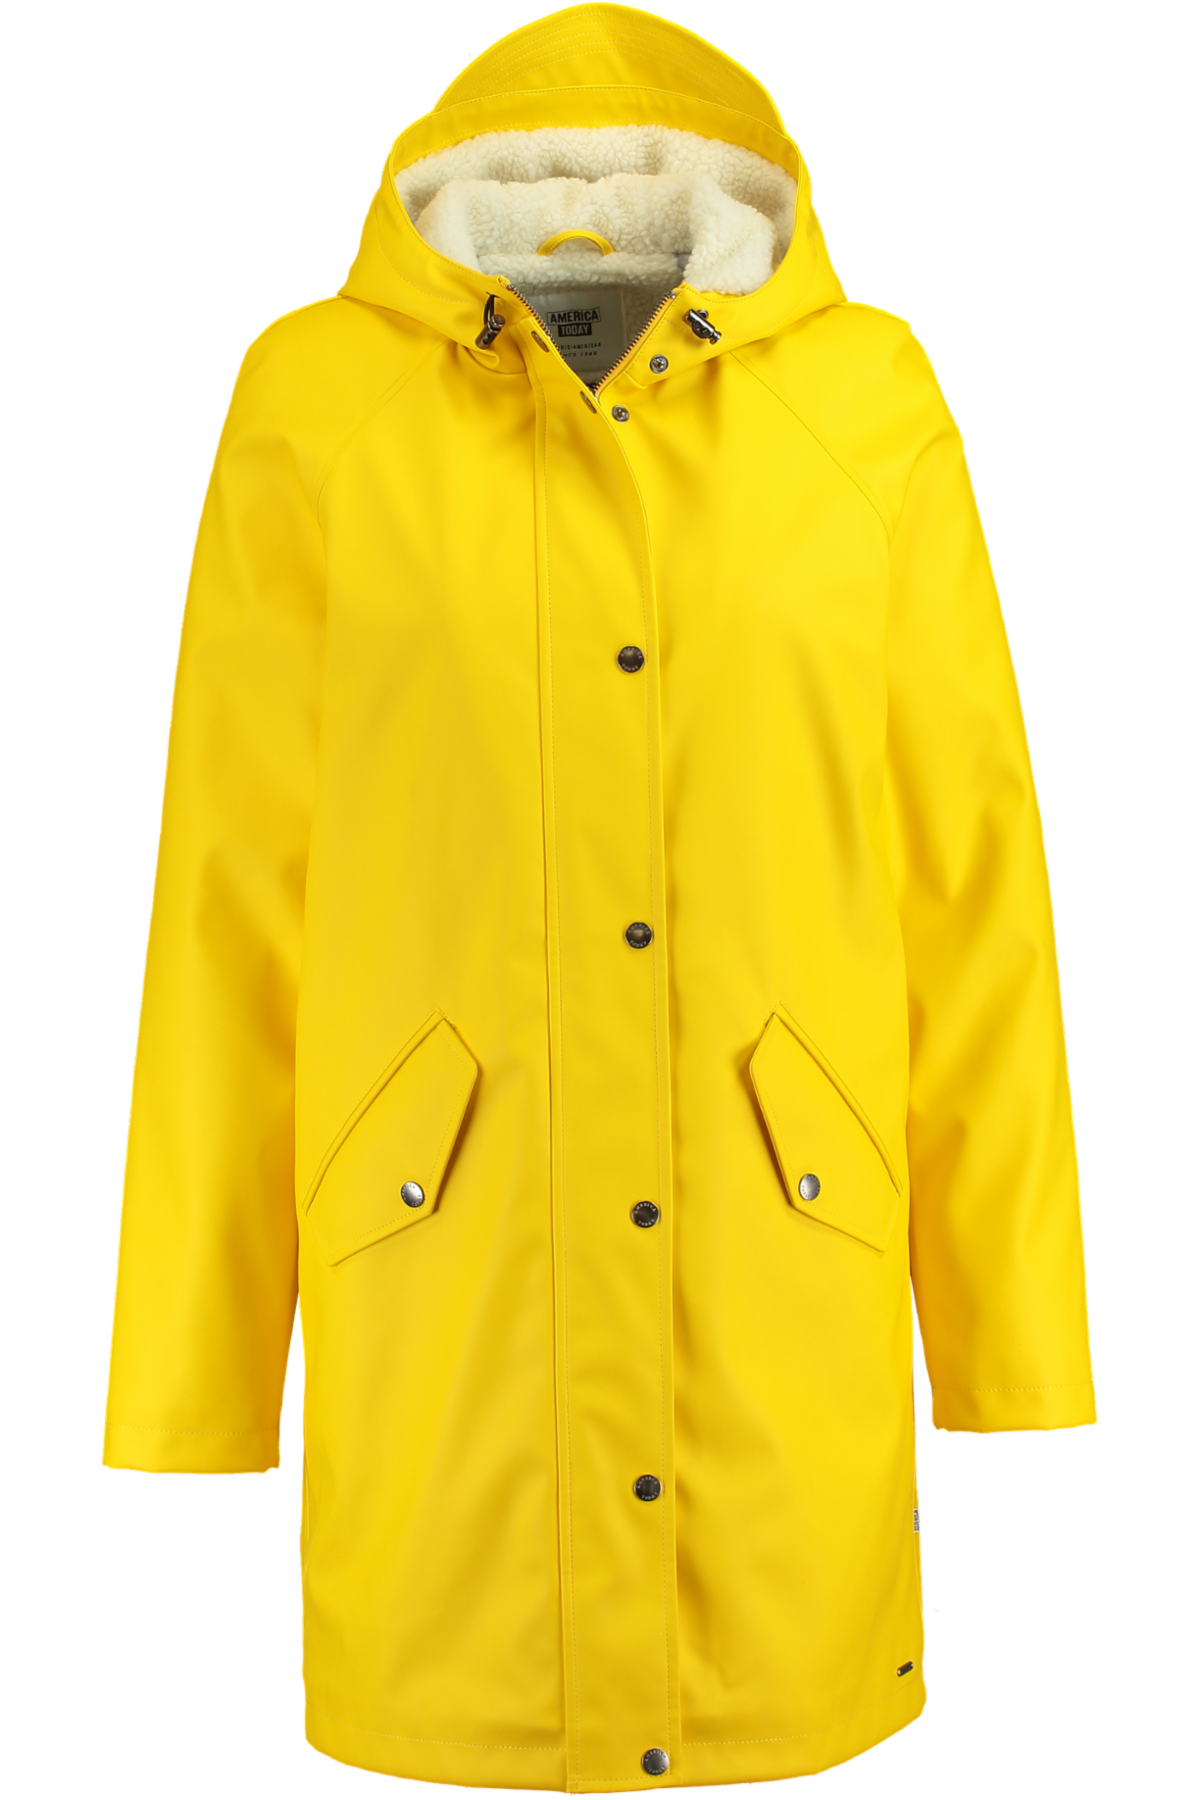 Rain jacket Janet teddy